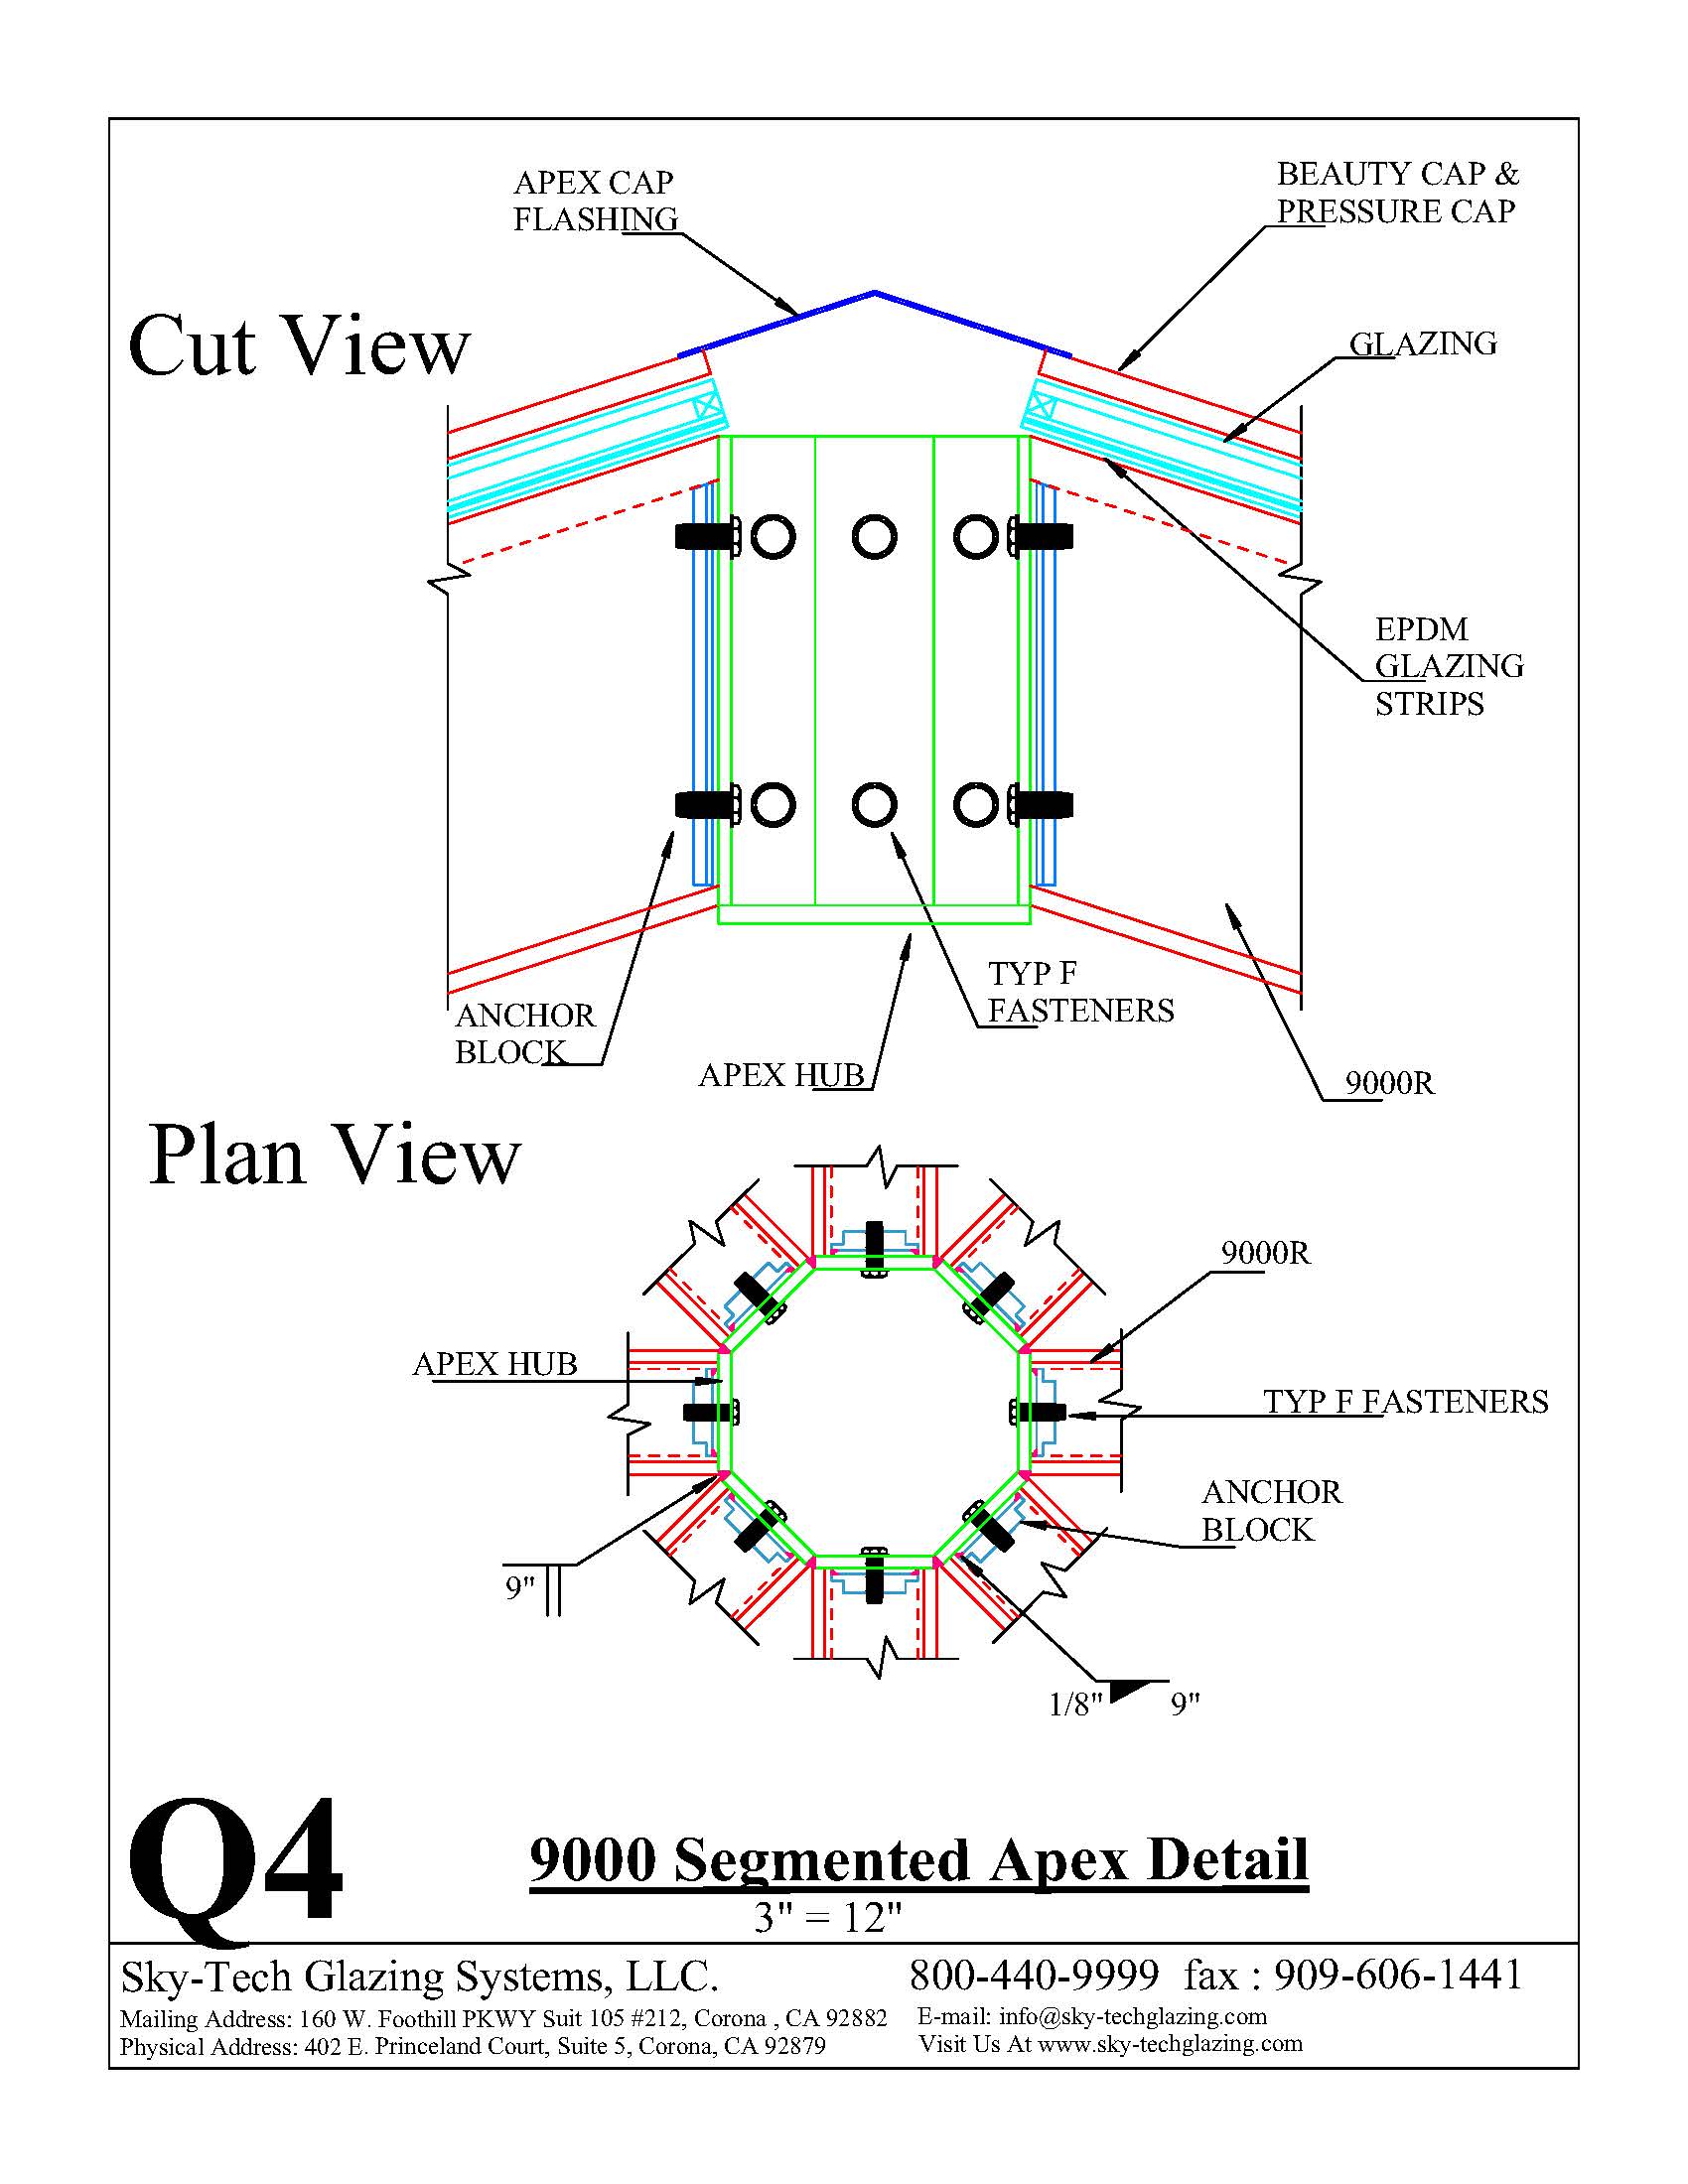 Q4 9000 Segmented Apex Detail